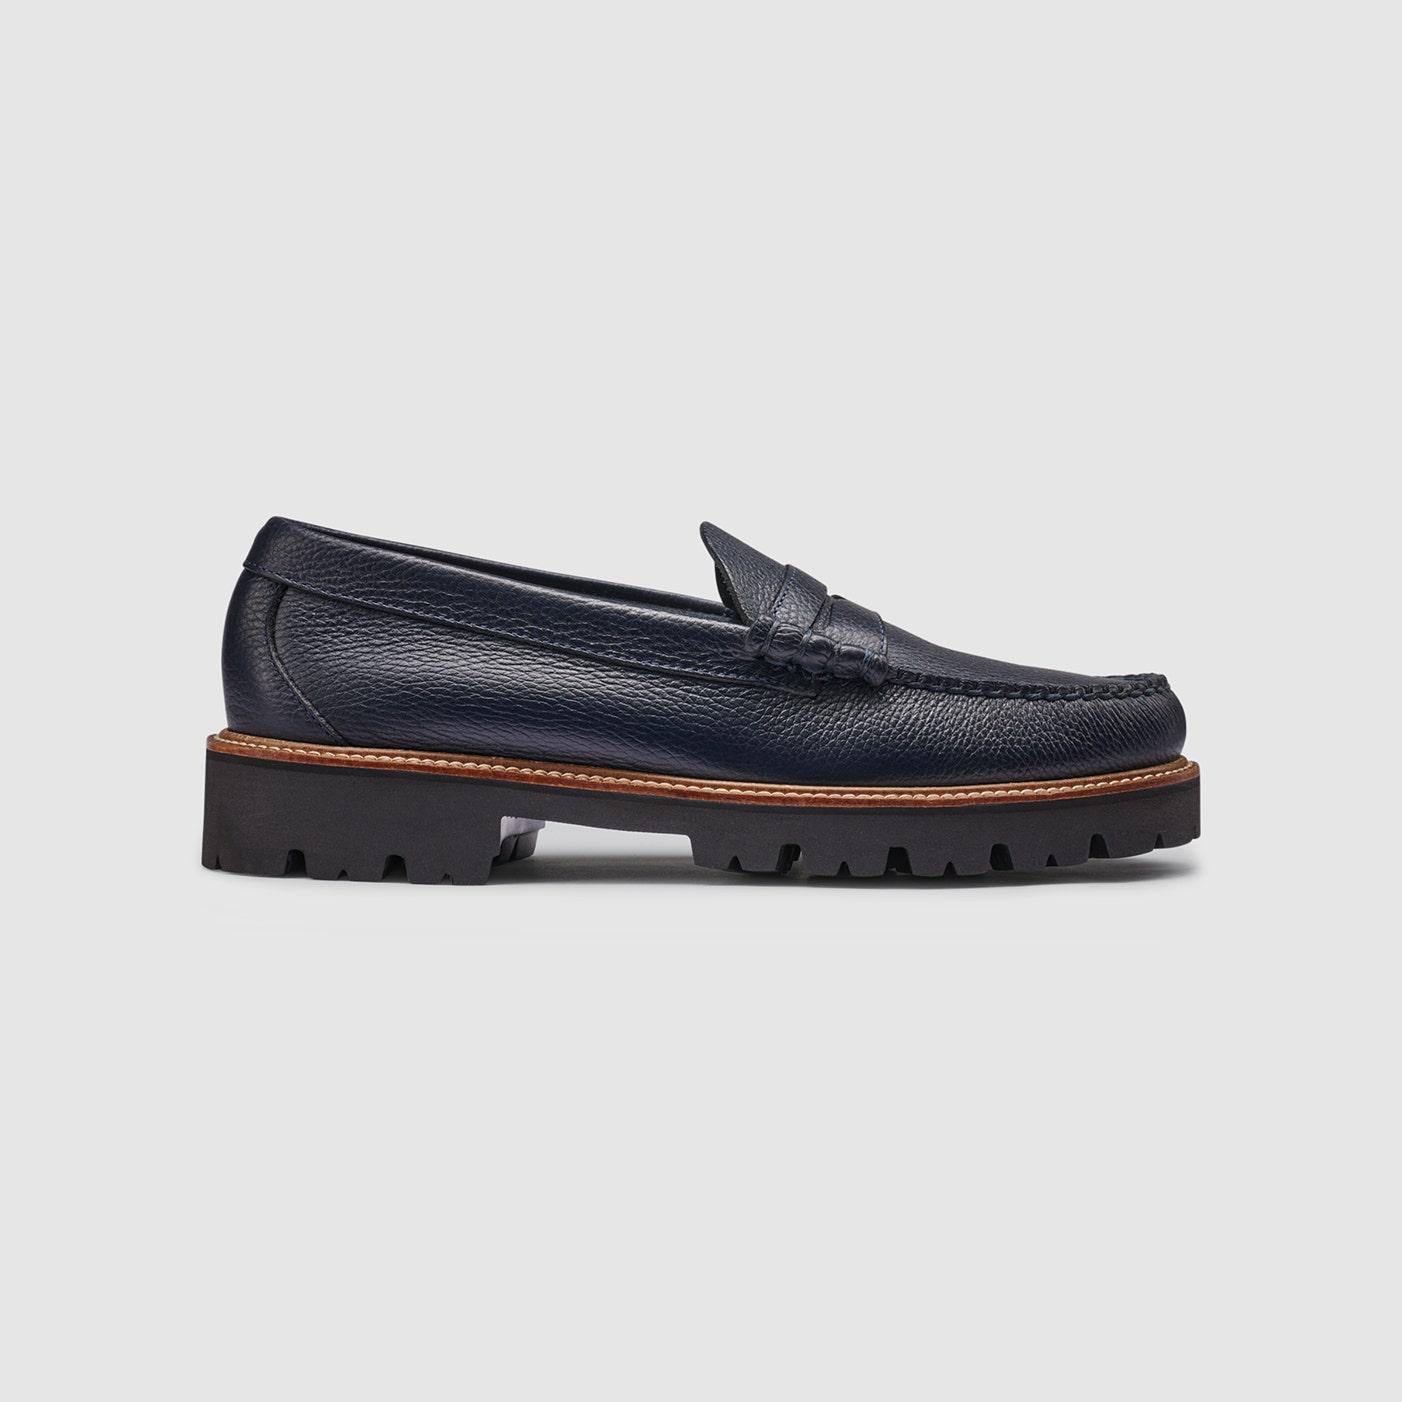 G.H.BASS | Mens Larson Softy Super Lug Weejuns Loafer Shoes | Black | Size 12 Product Image